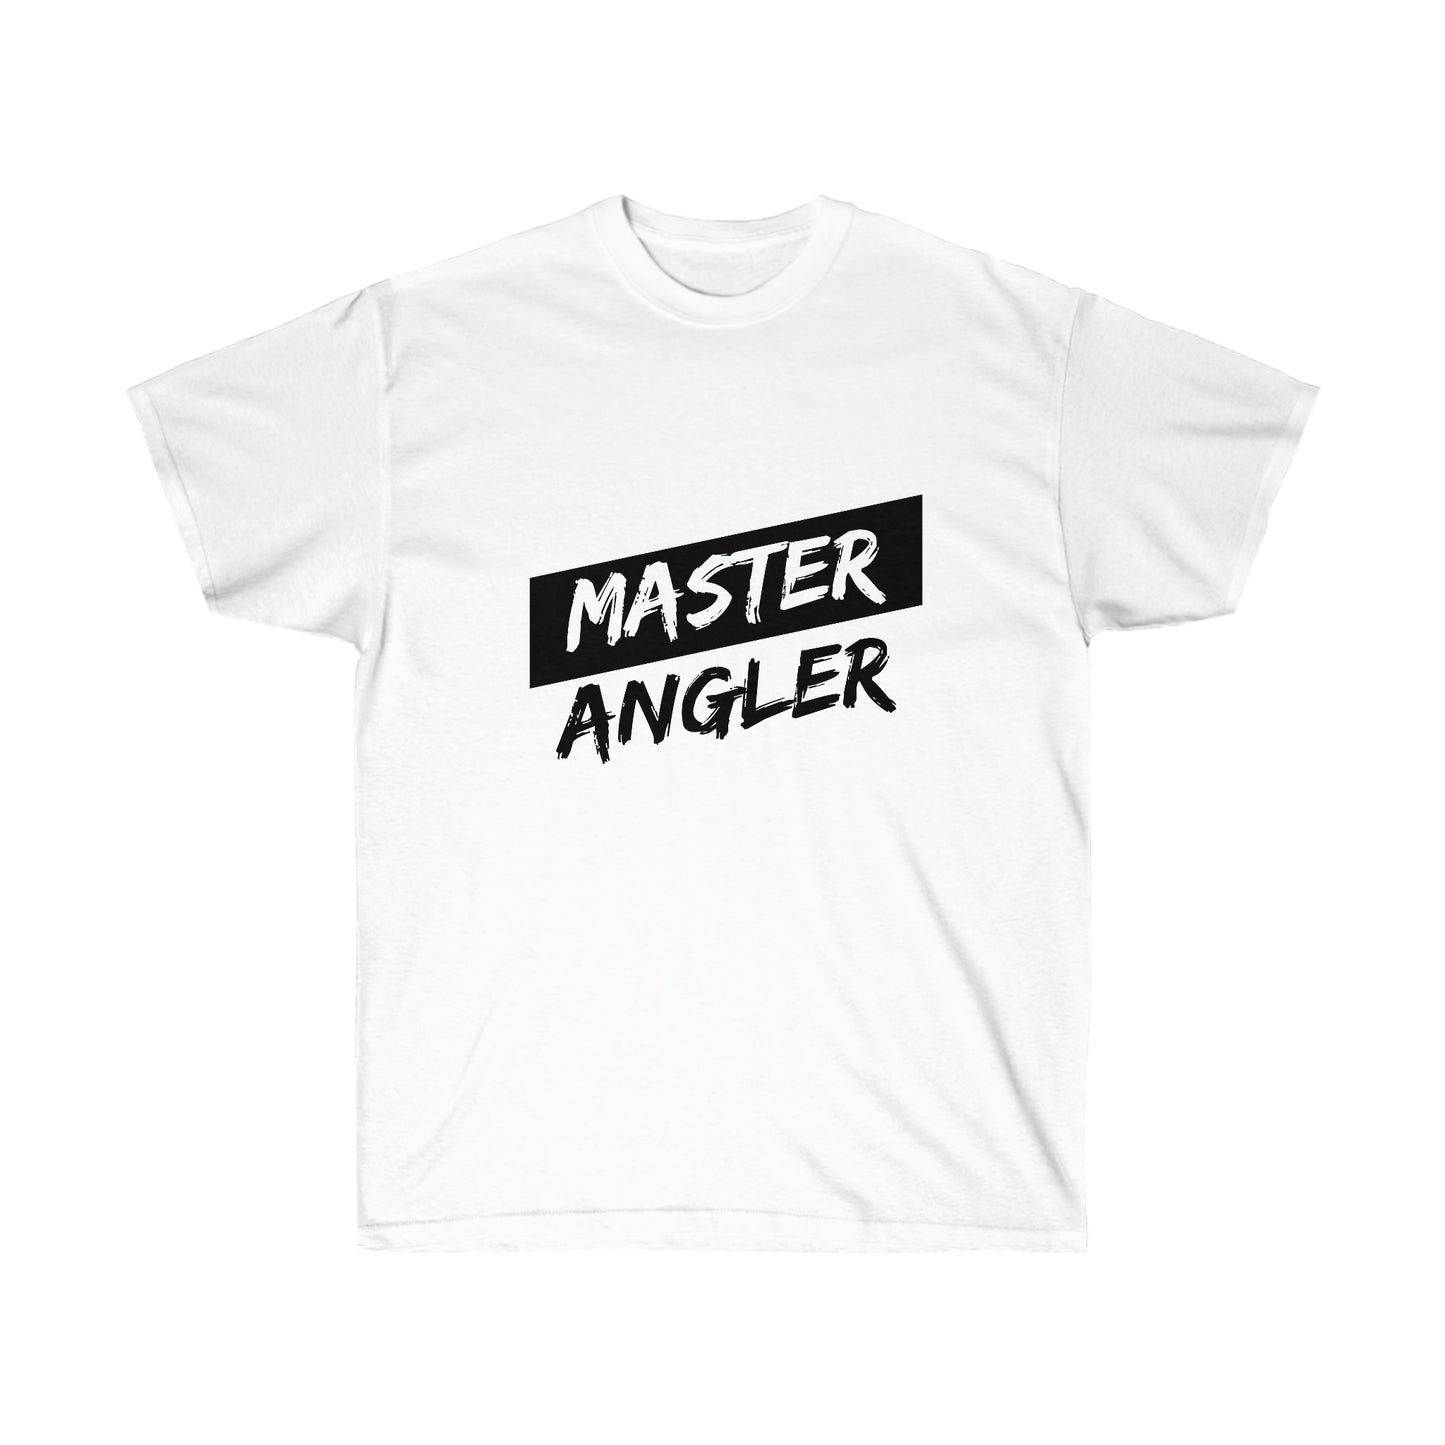 Master Angler - Slash Black